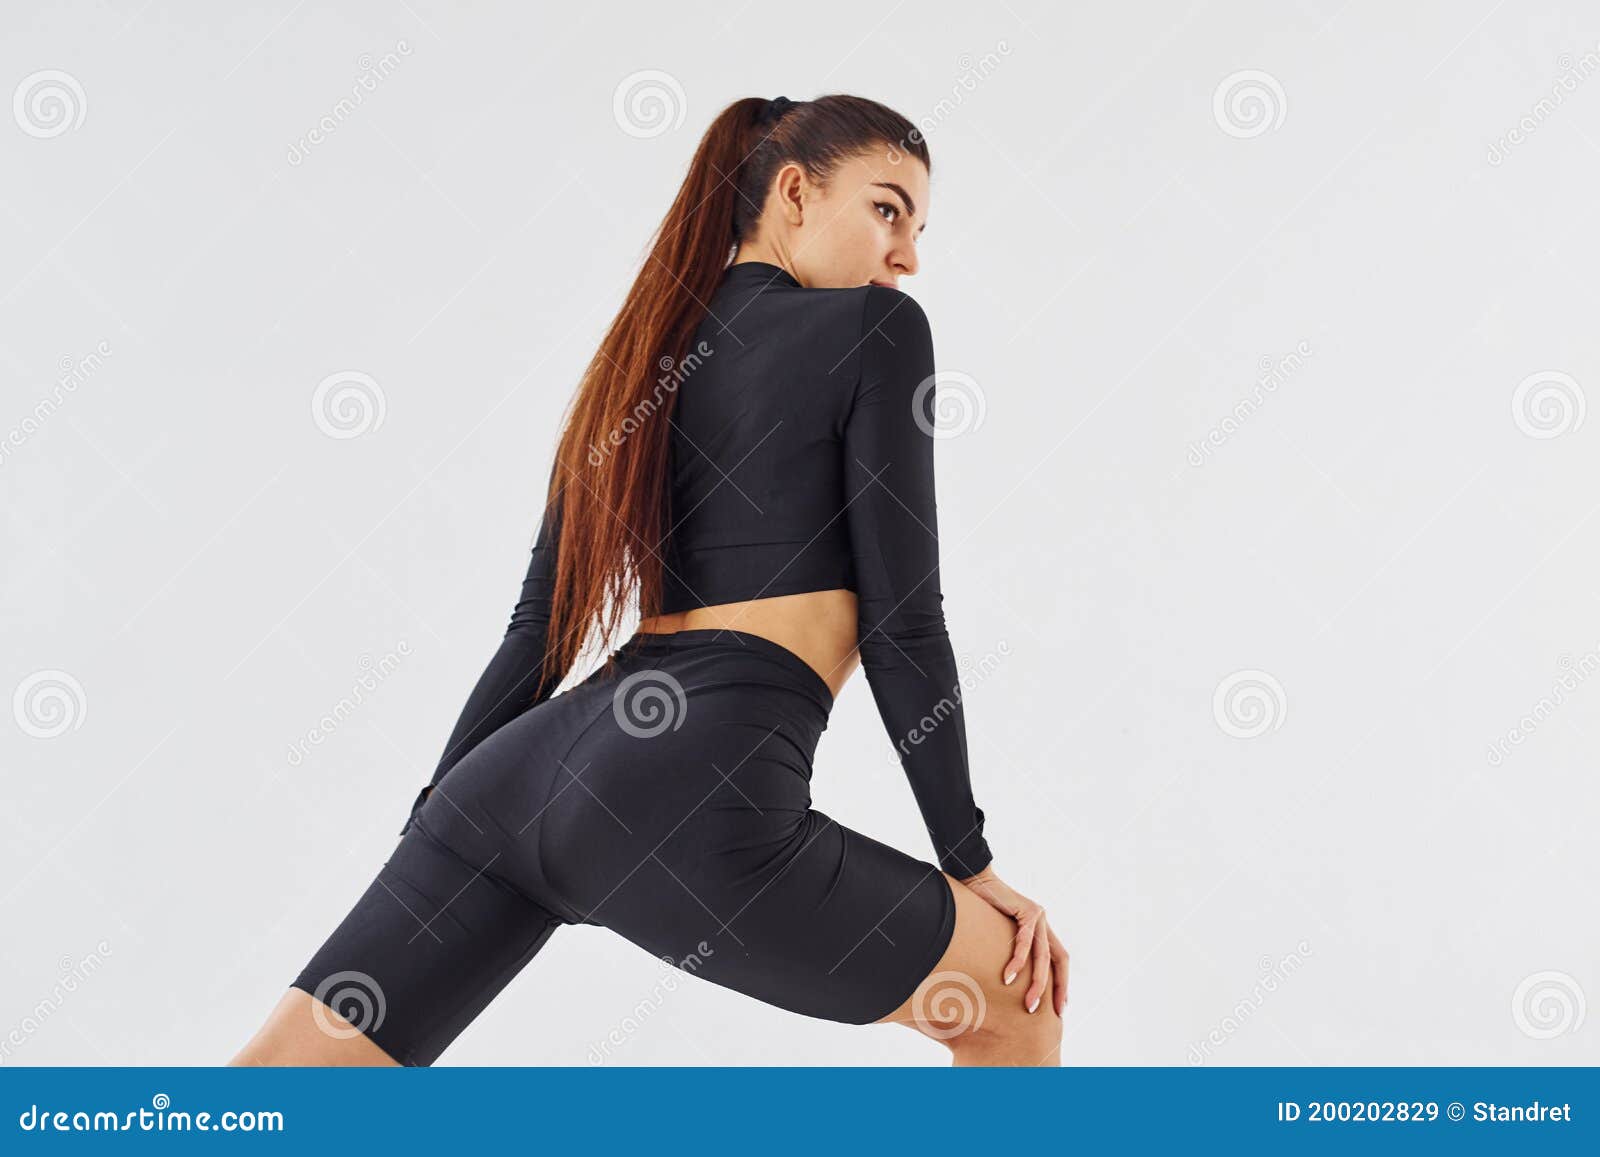 Best of Girl twerking in yoga pants